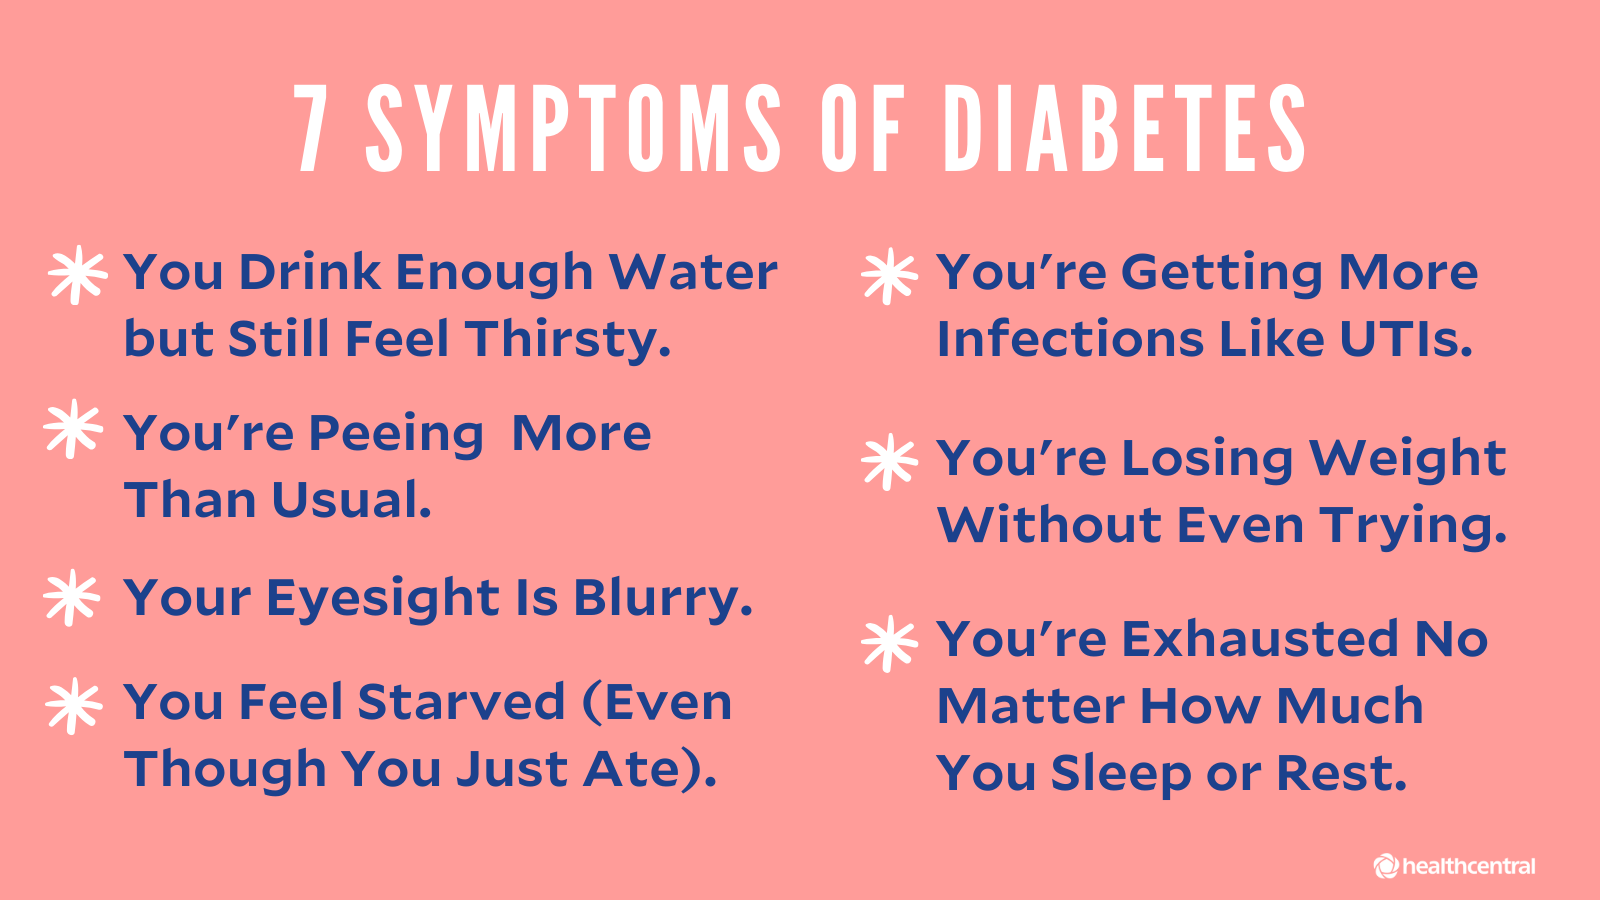 diabetes symptoms and treatment